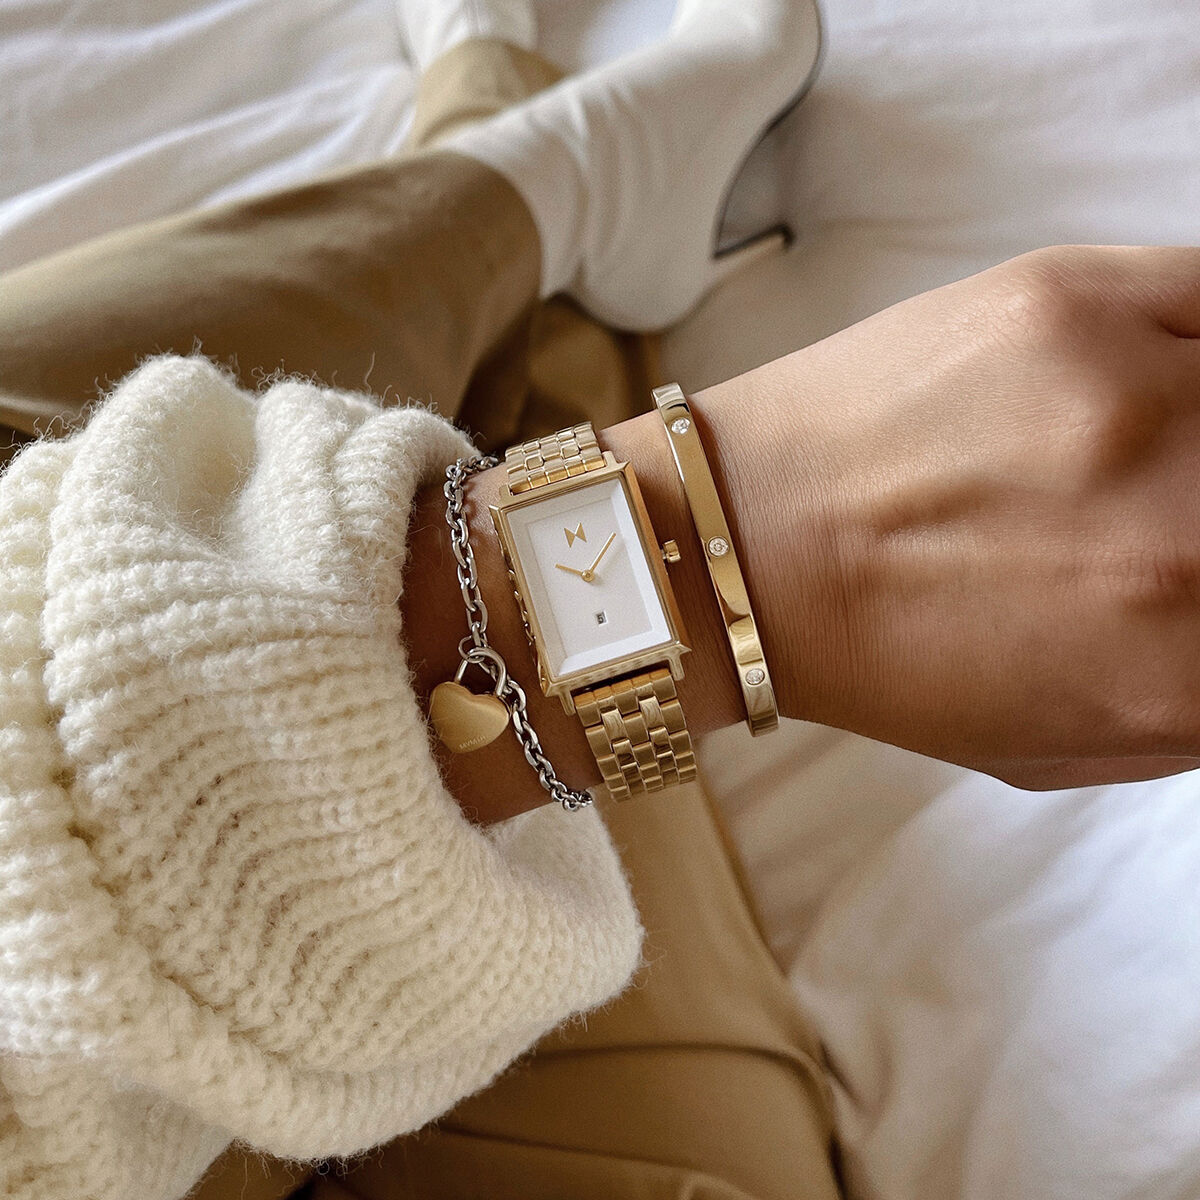 Townhouse 21mm Rectangle White & Gold Bracelet Watch | Olivia Burton London